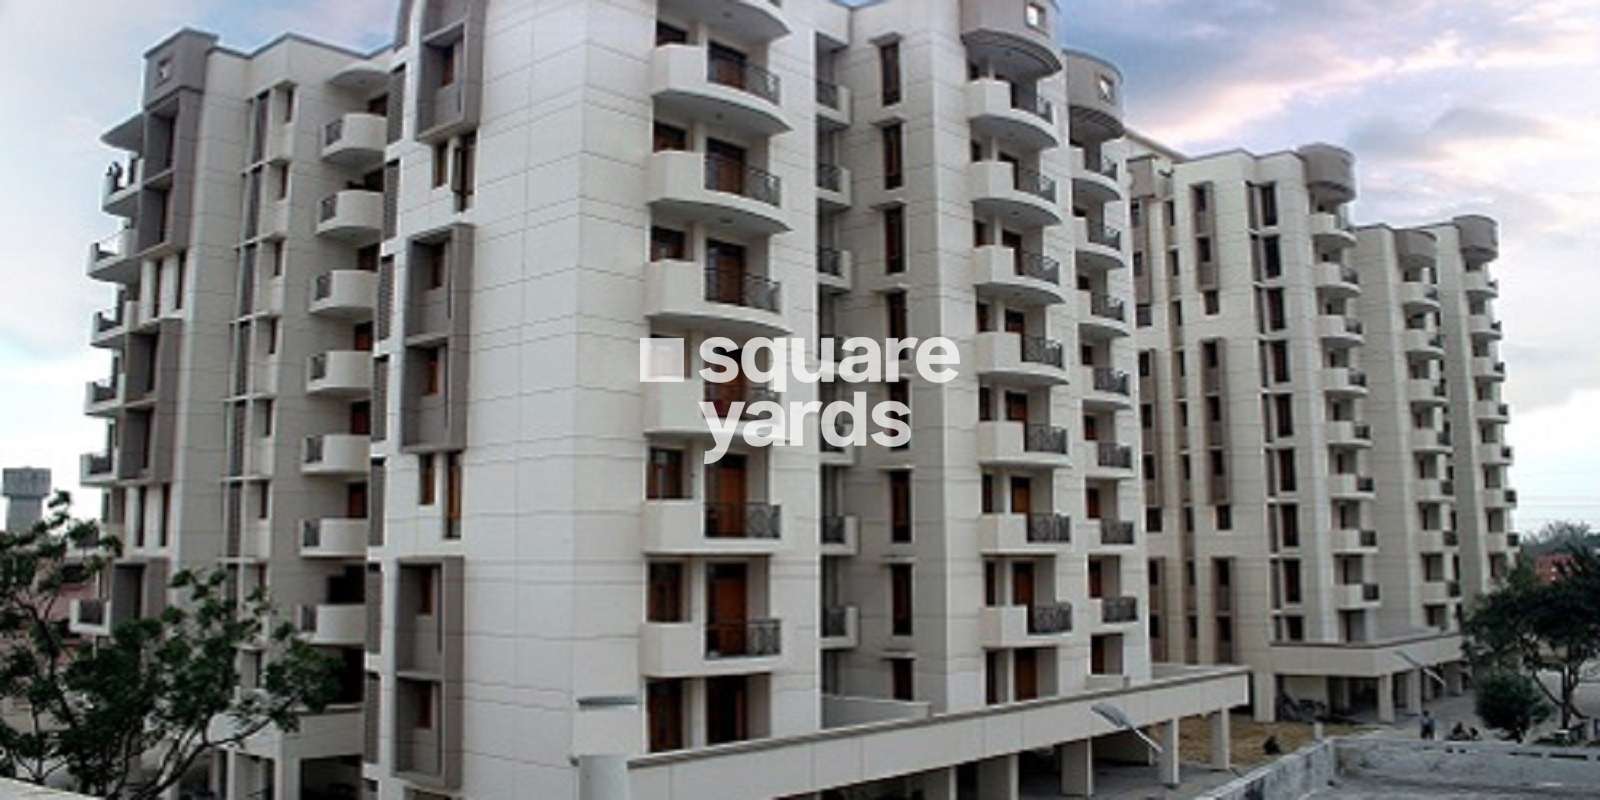 RPS Paras Apartments Cover Image